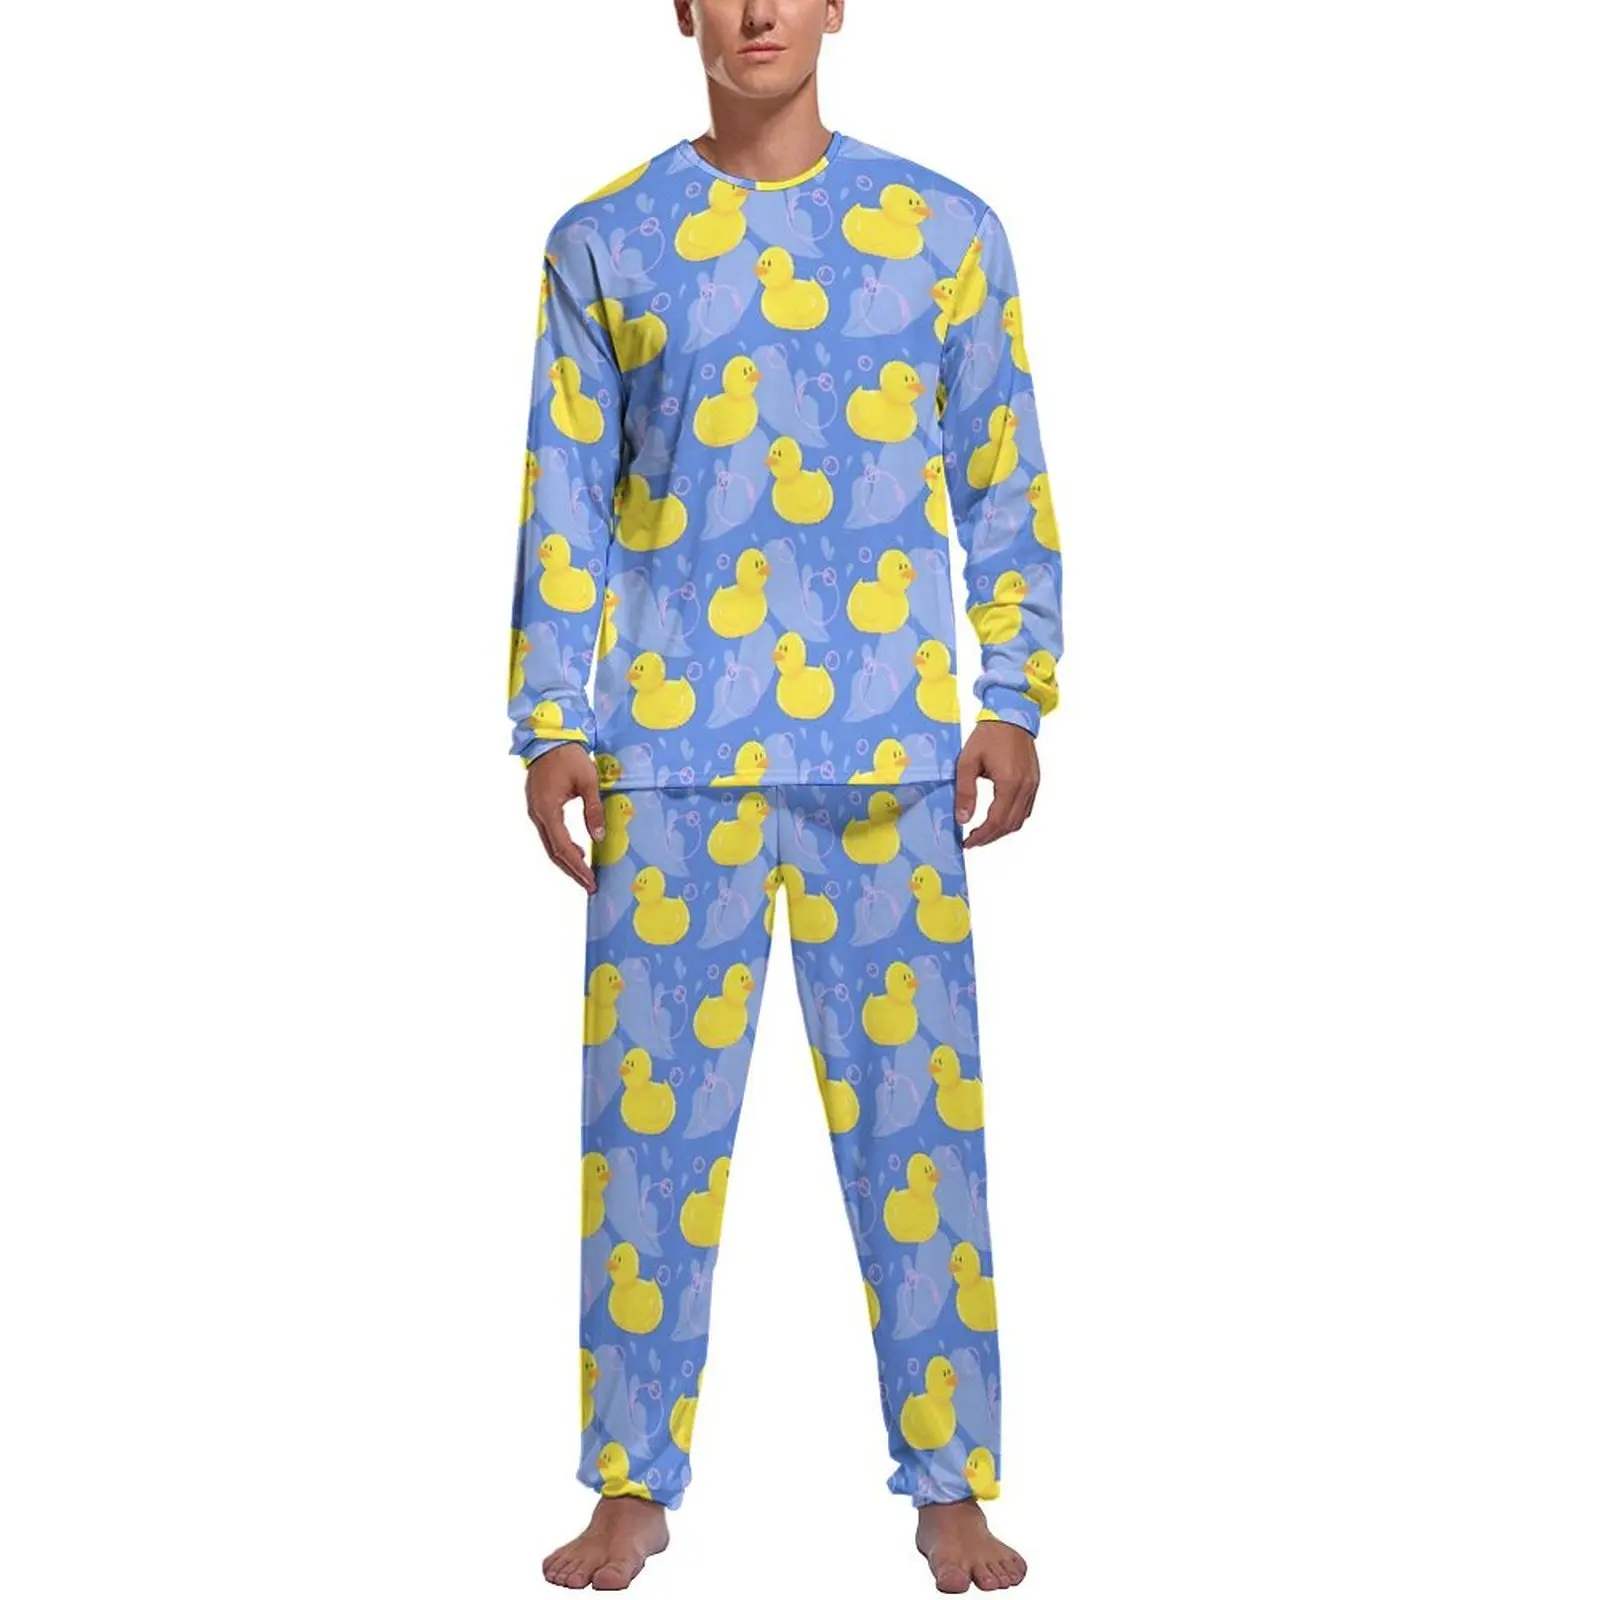 

Rubber Ducks Pajamas Cute Animal Print Mens Long-Sleeve Fashion Pajama Sets 2 Piece Casual Spring Design Nightwear Gift Idea